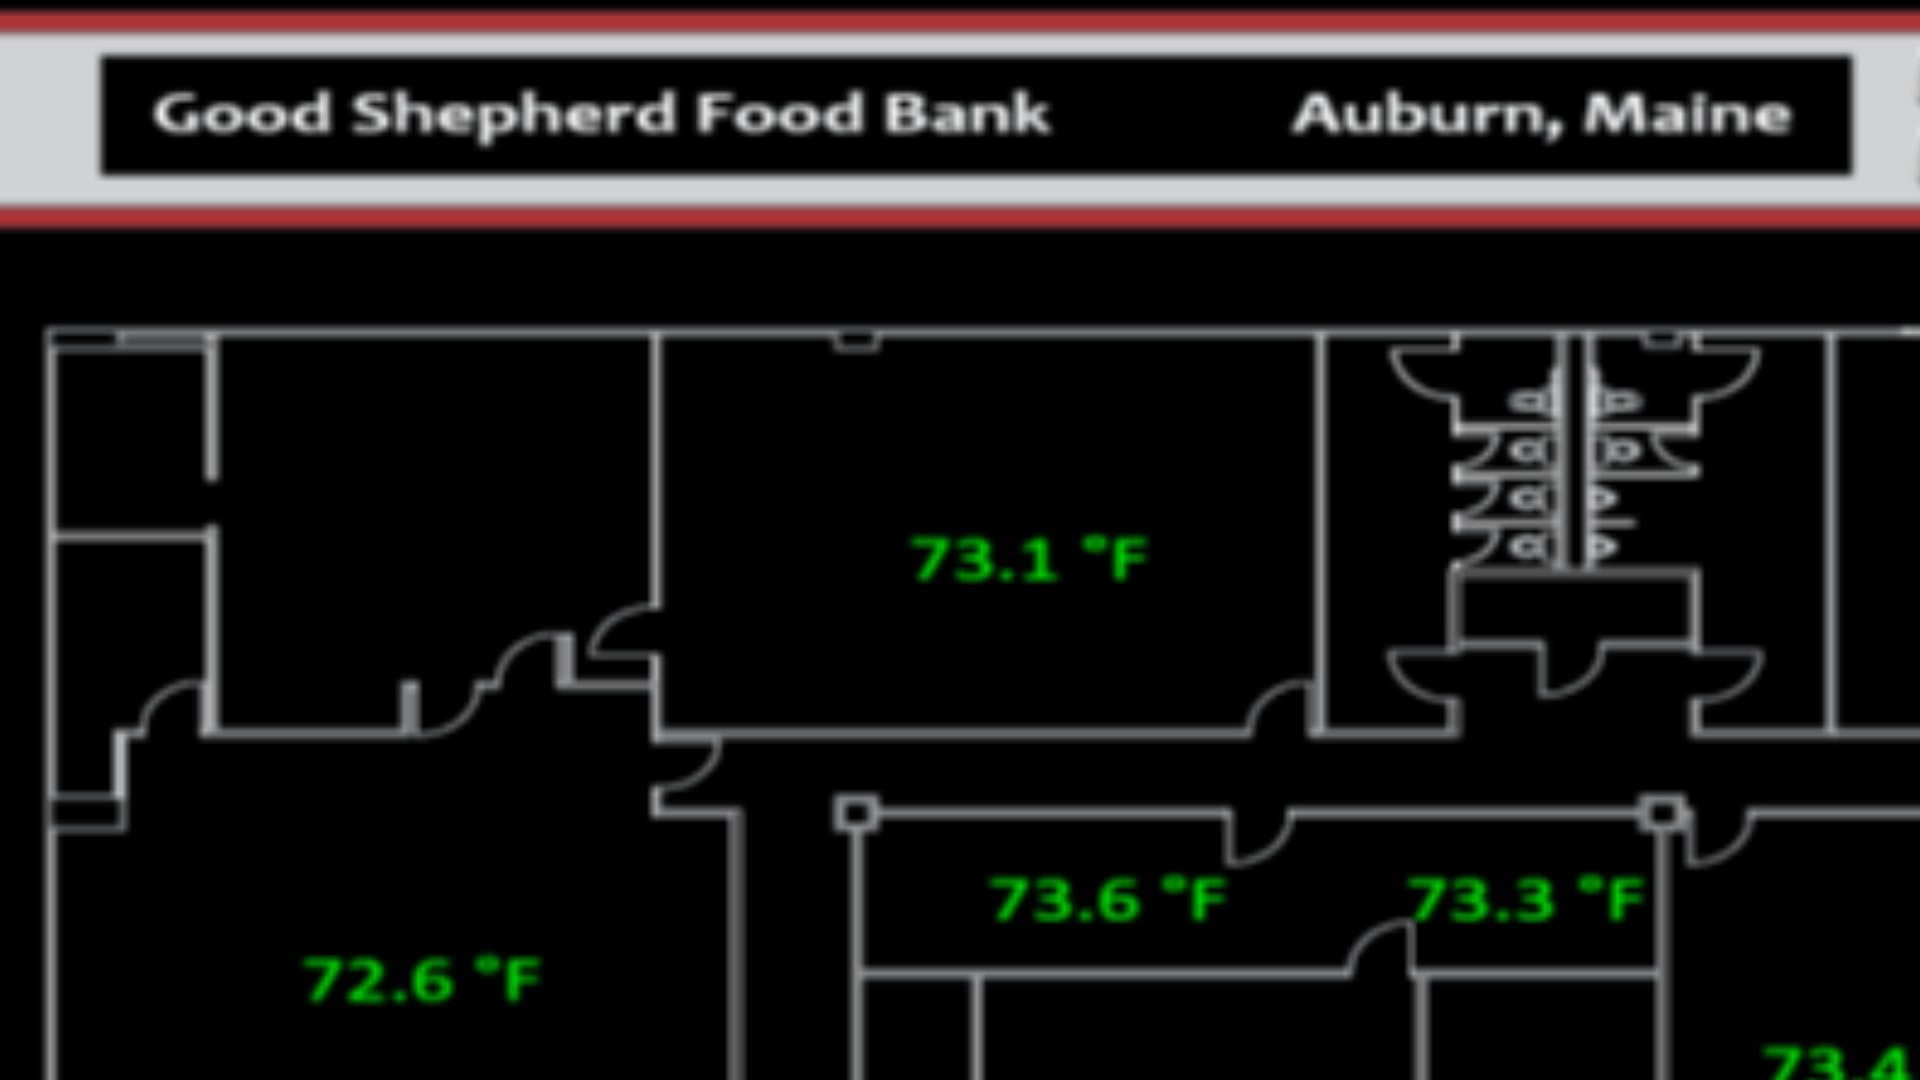 Image of black and green blueprint of Good Shepherd Food Bank's building controls